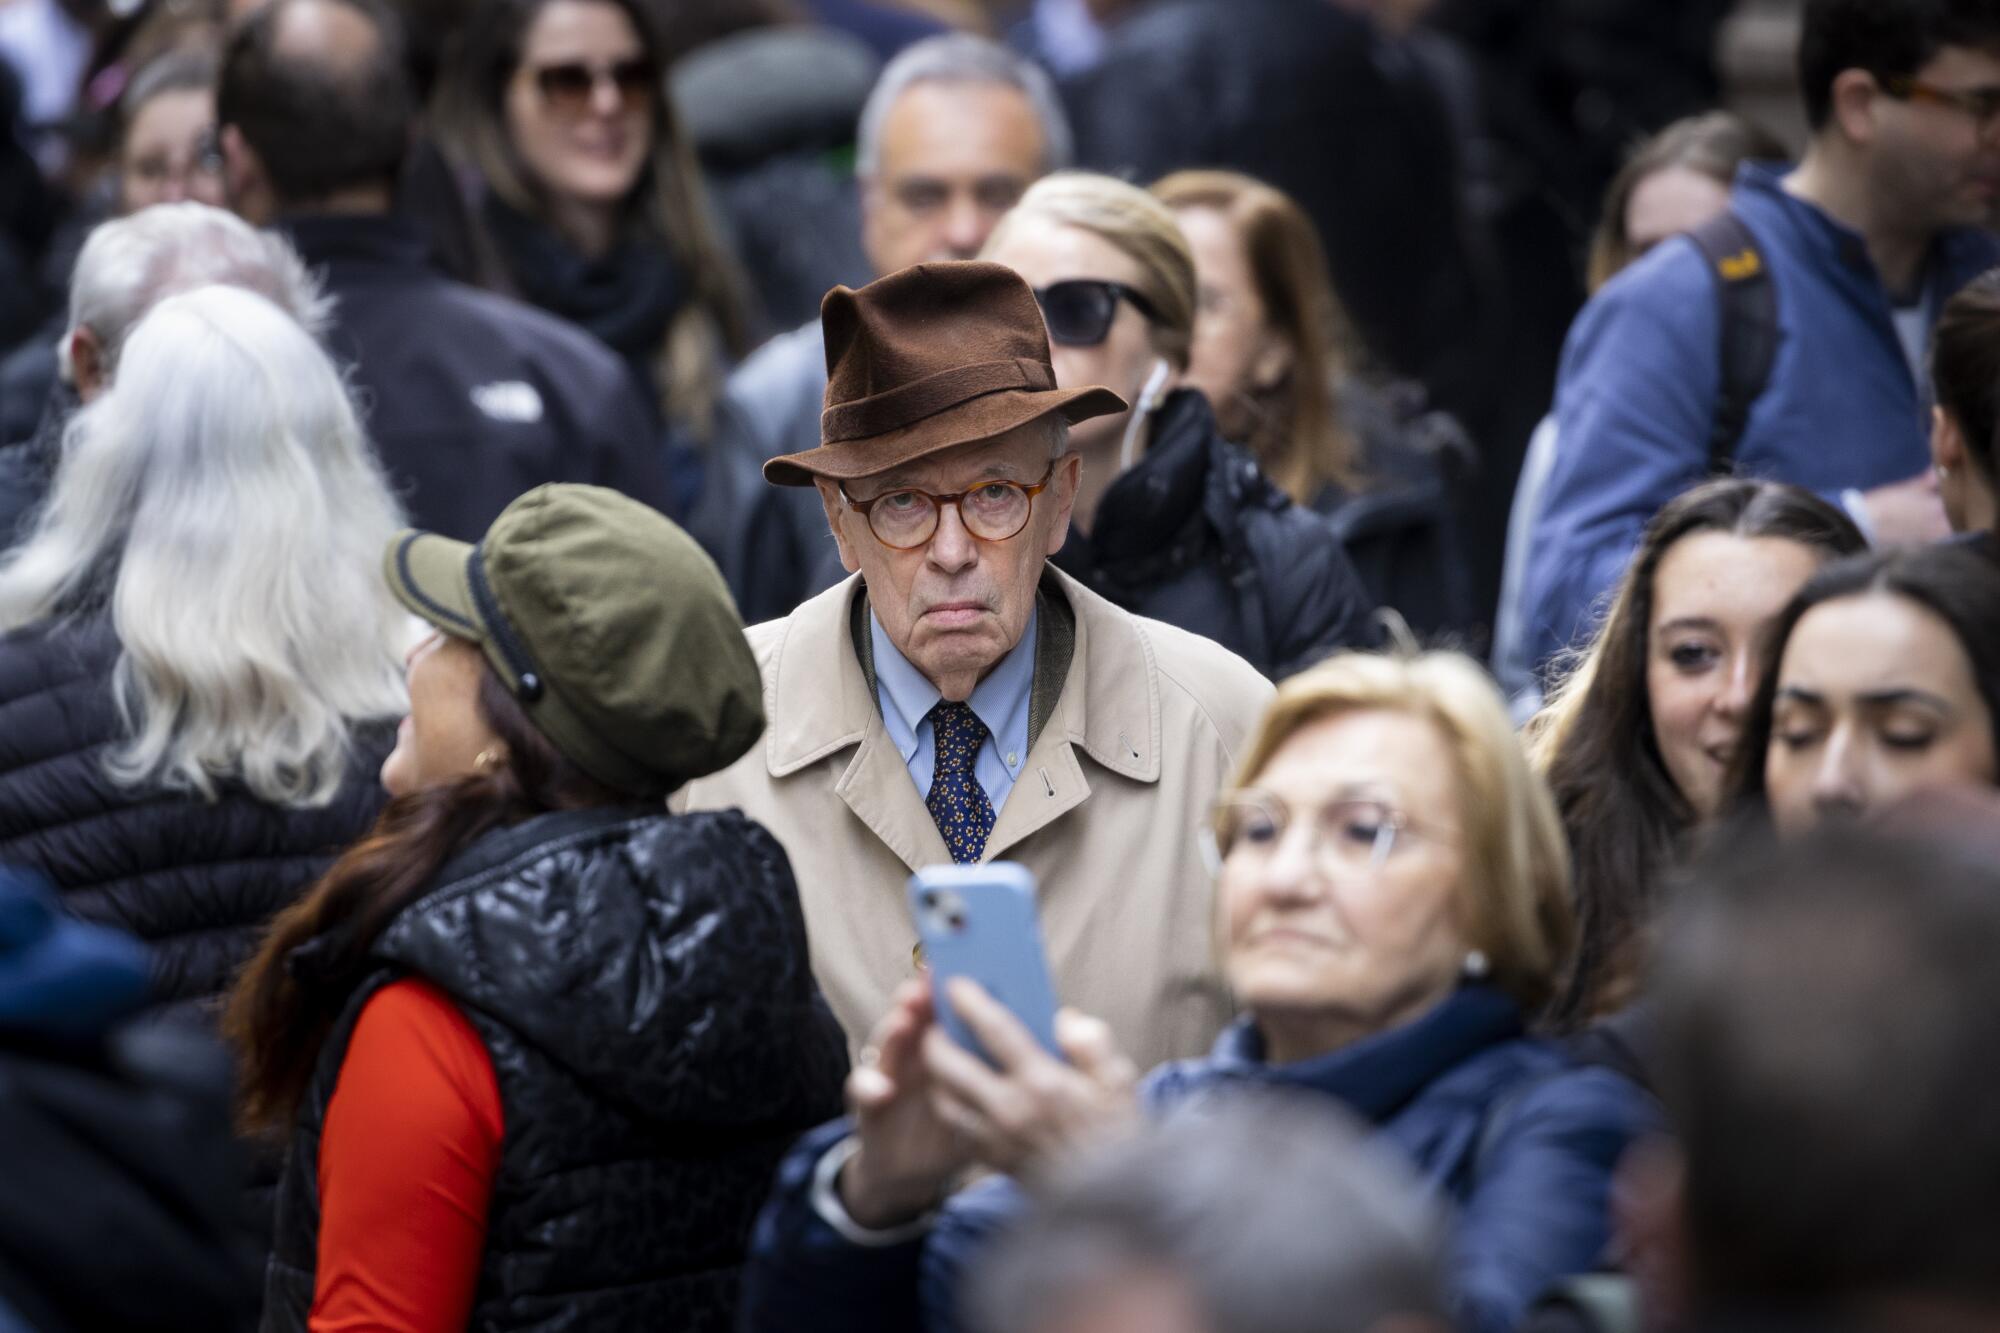 A man in a hat looks disgruntled as people crowd a sidewalk.